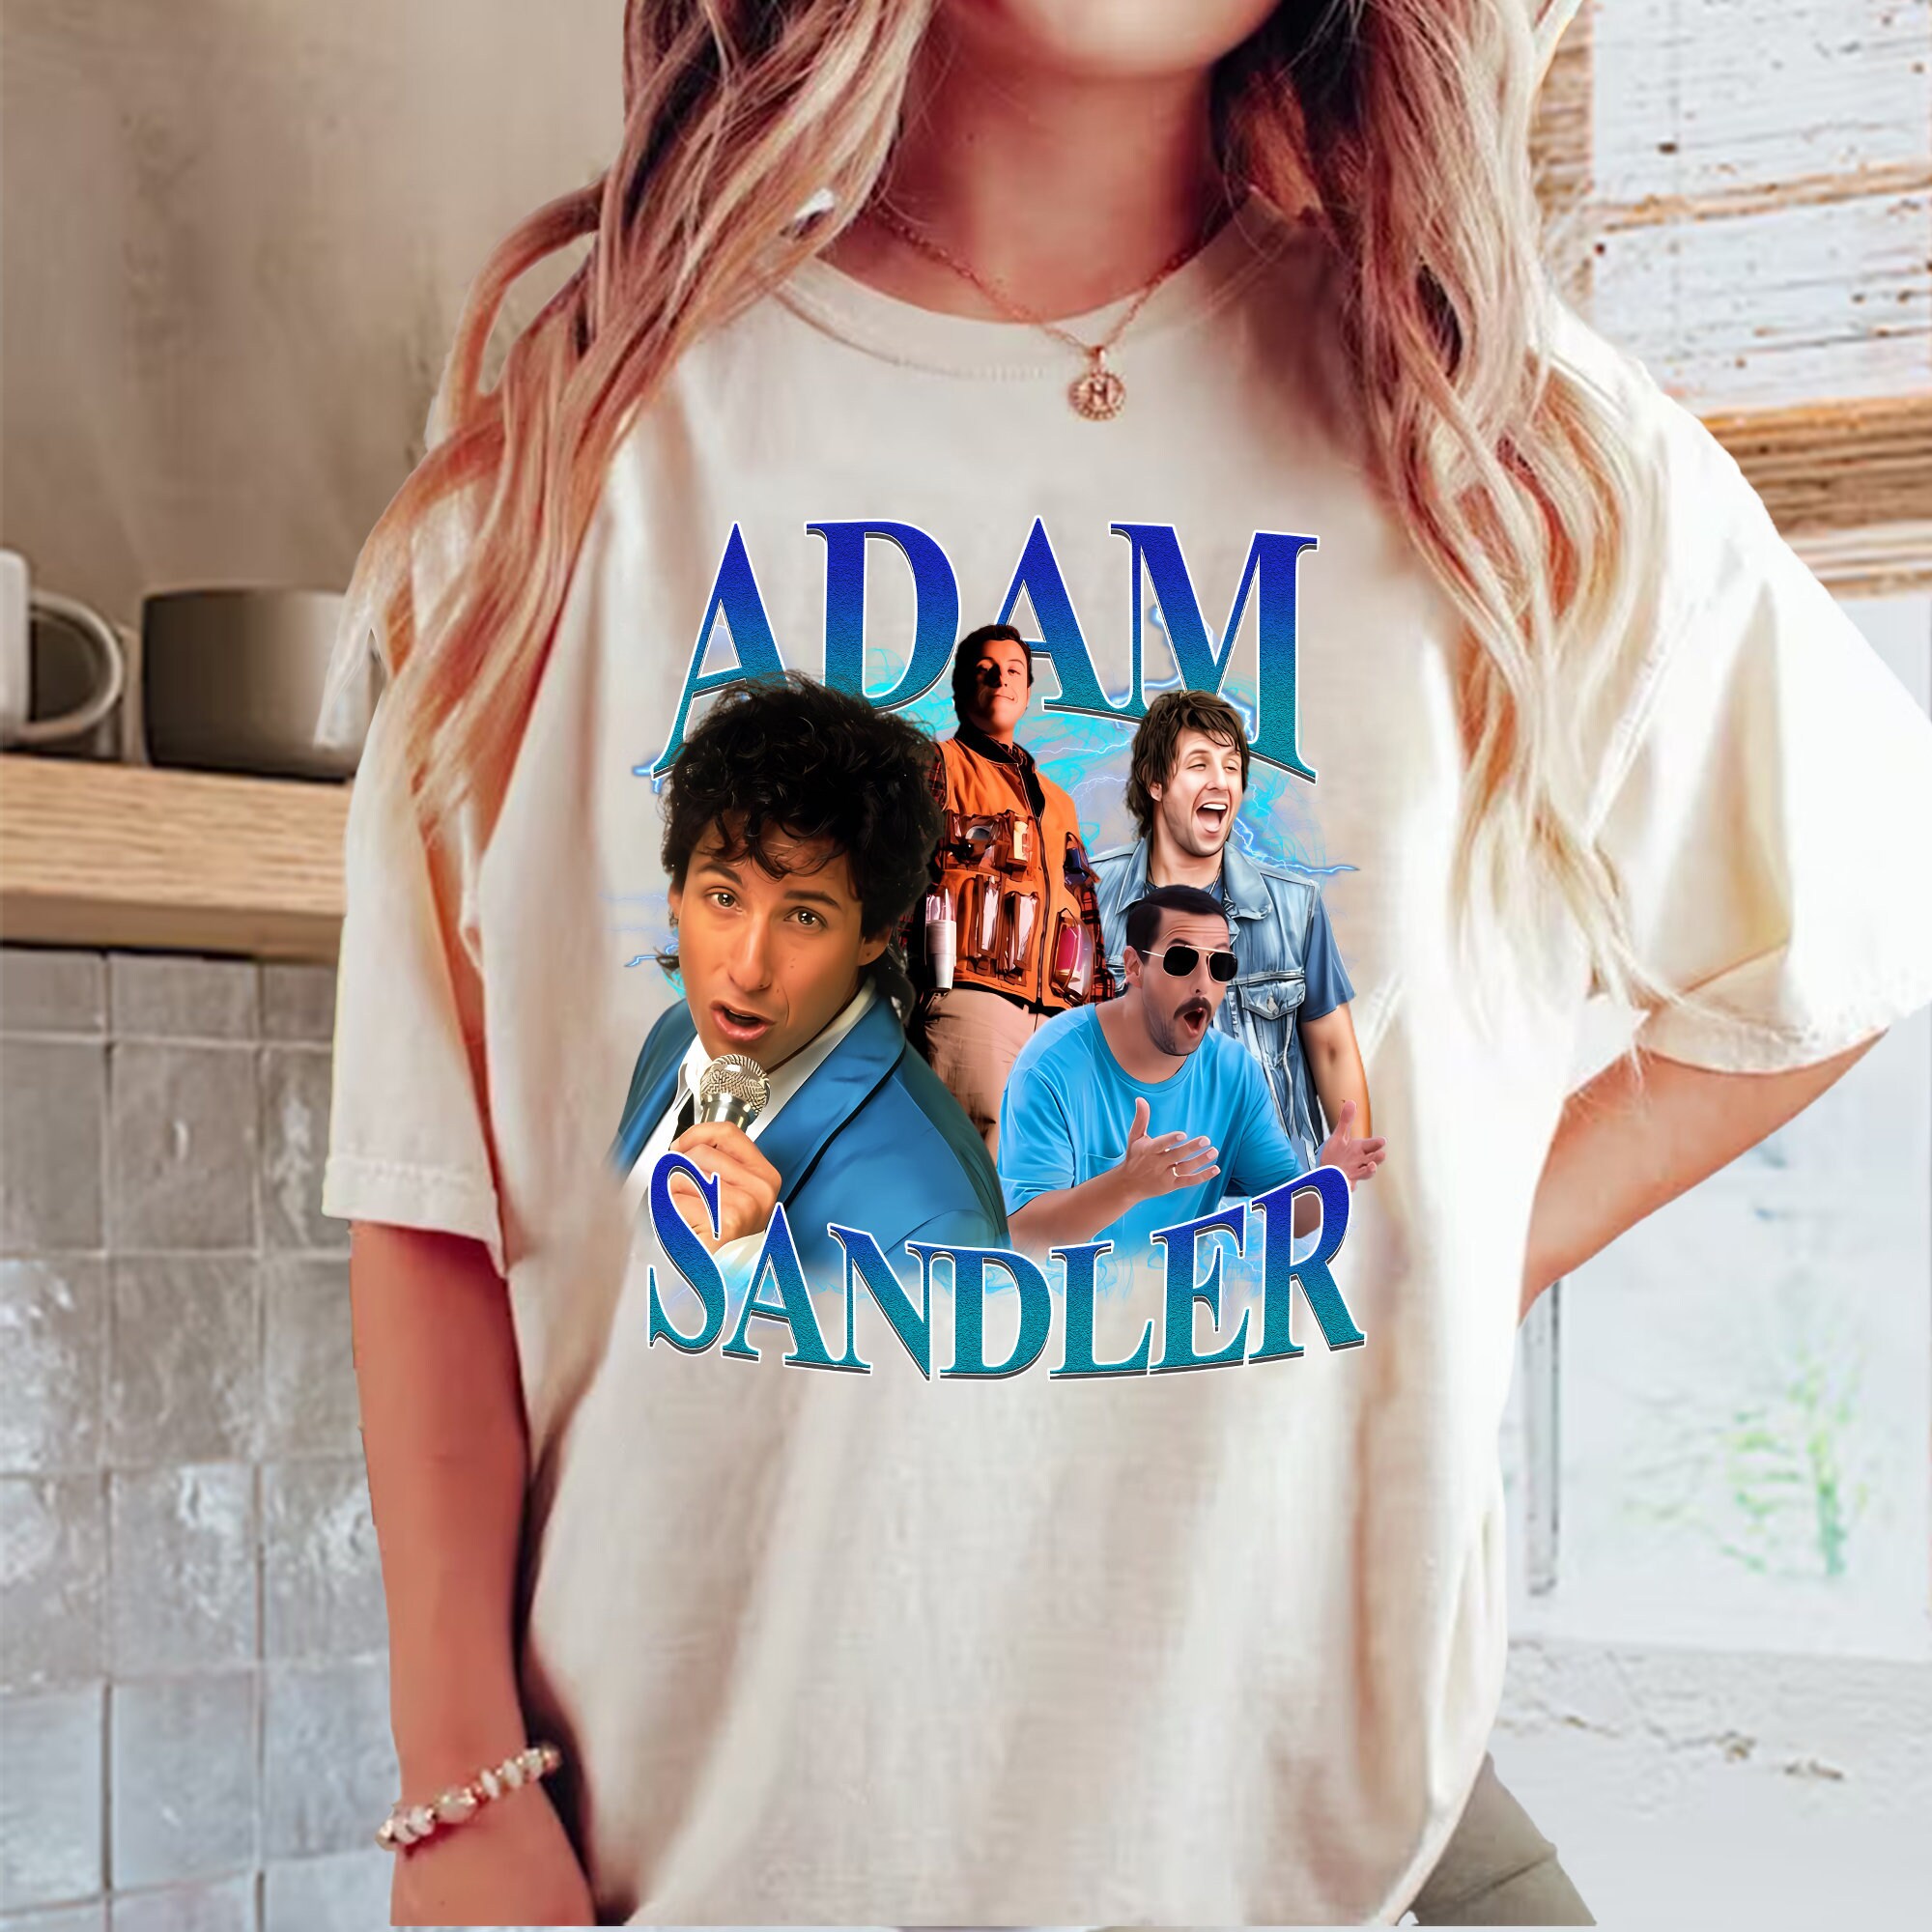 The t-shirt-KPPX Rebel Radio Adam Sandler in Radio Rebel